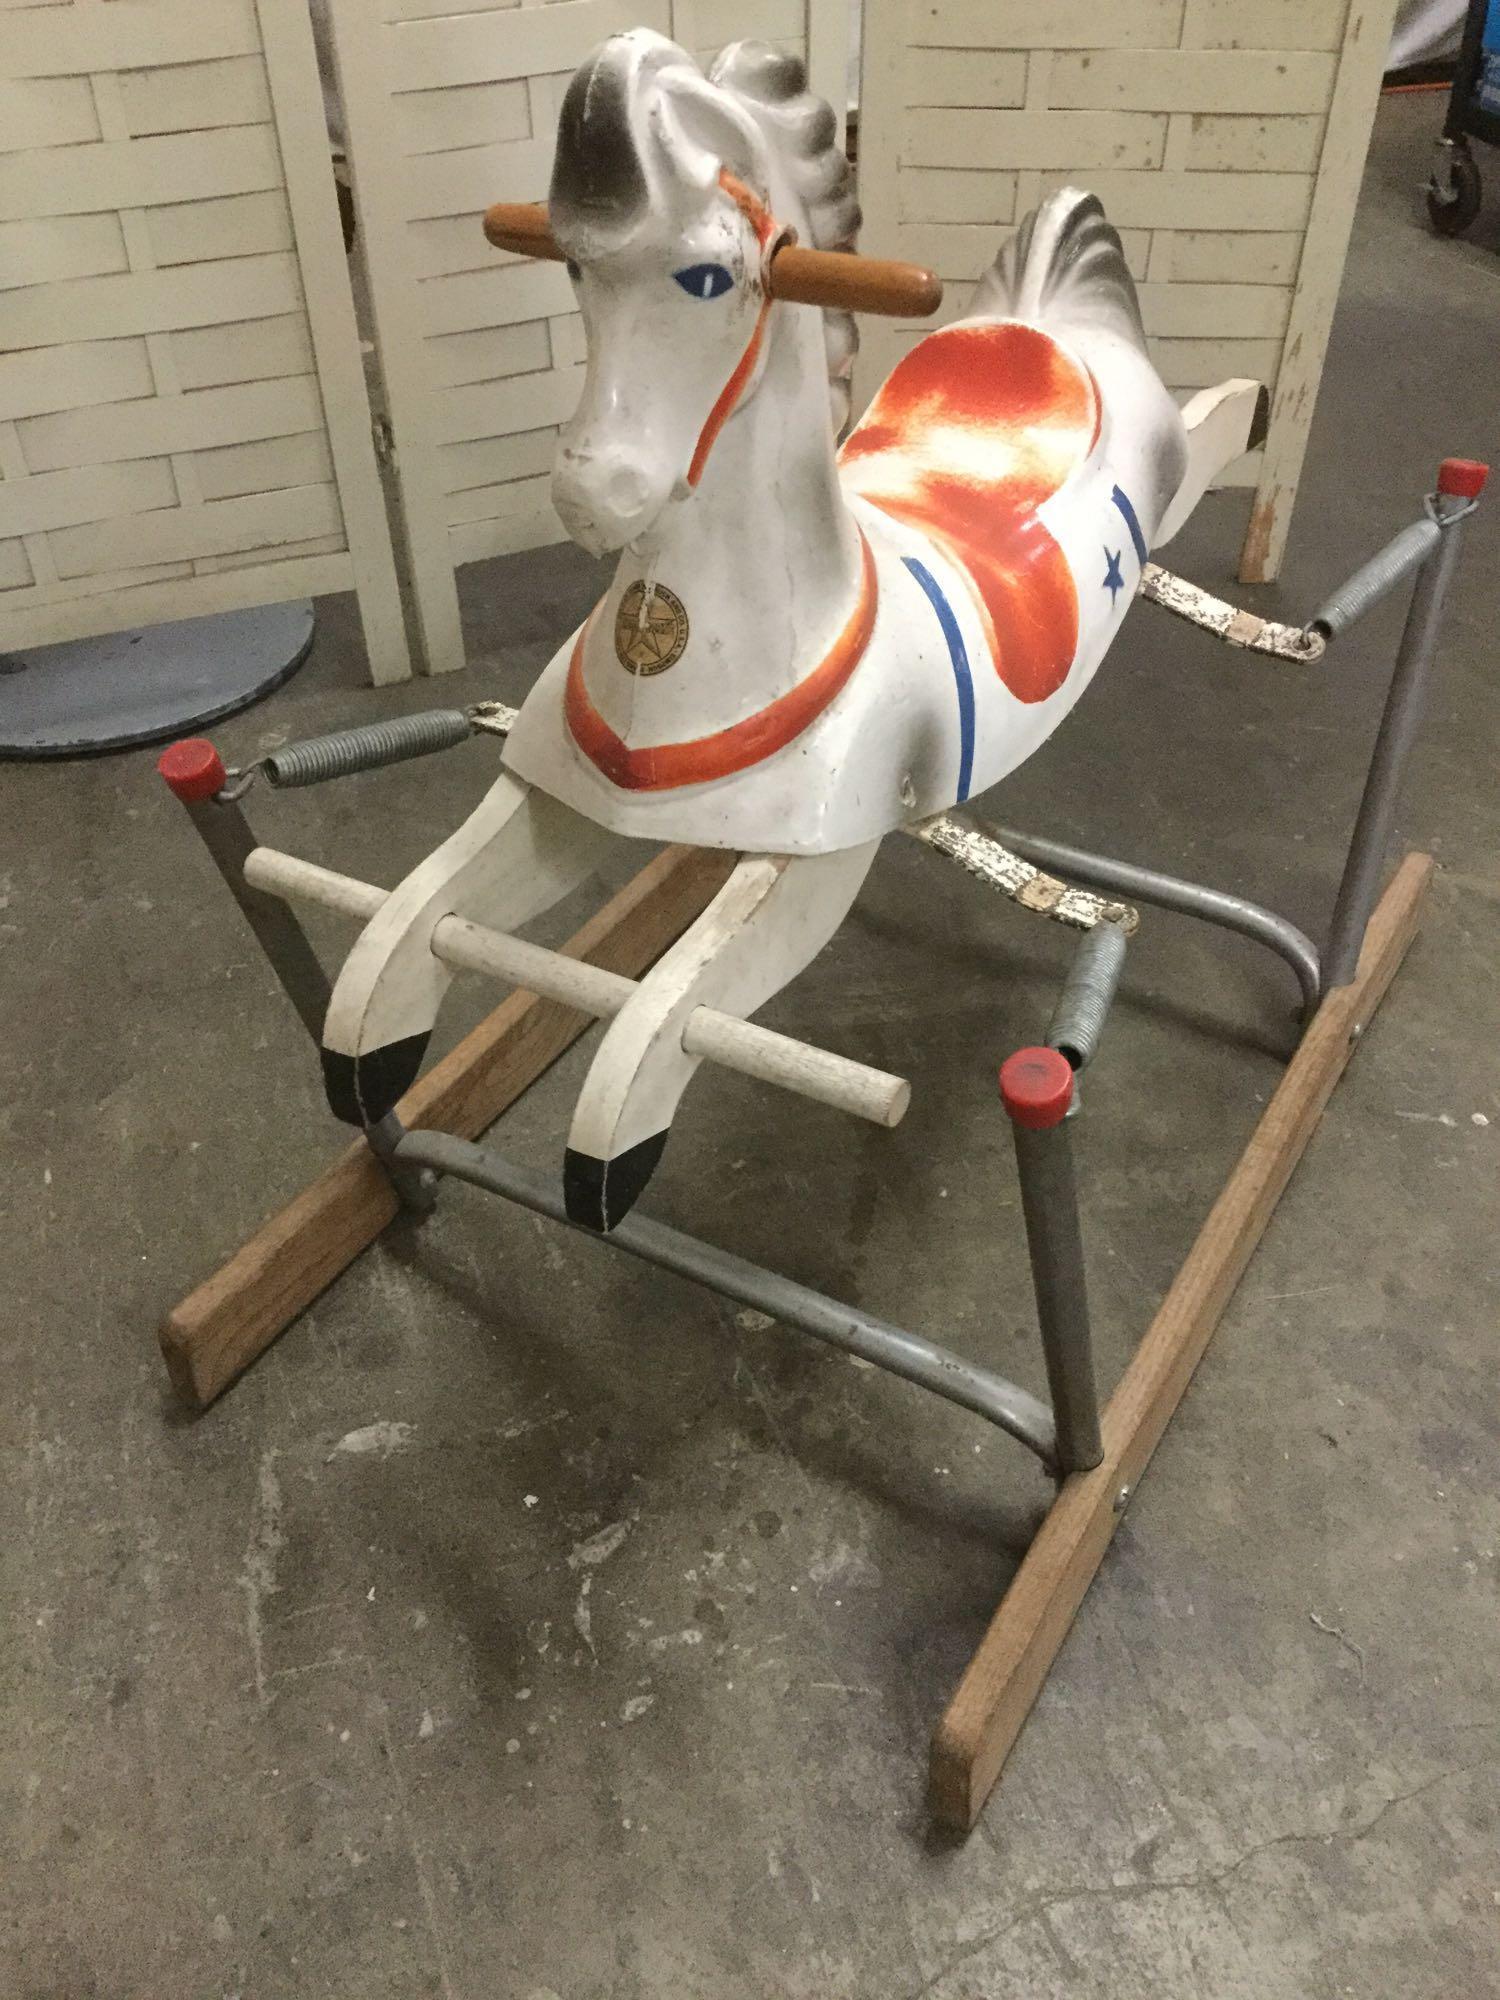 Vintage Sears Roebuck & Co. Happytime rocking horse - plastic molded horse